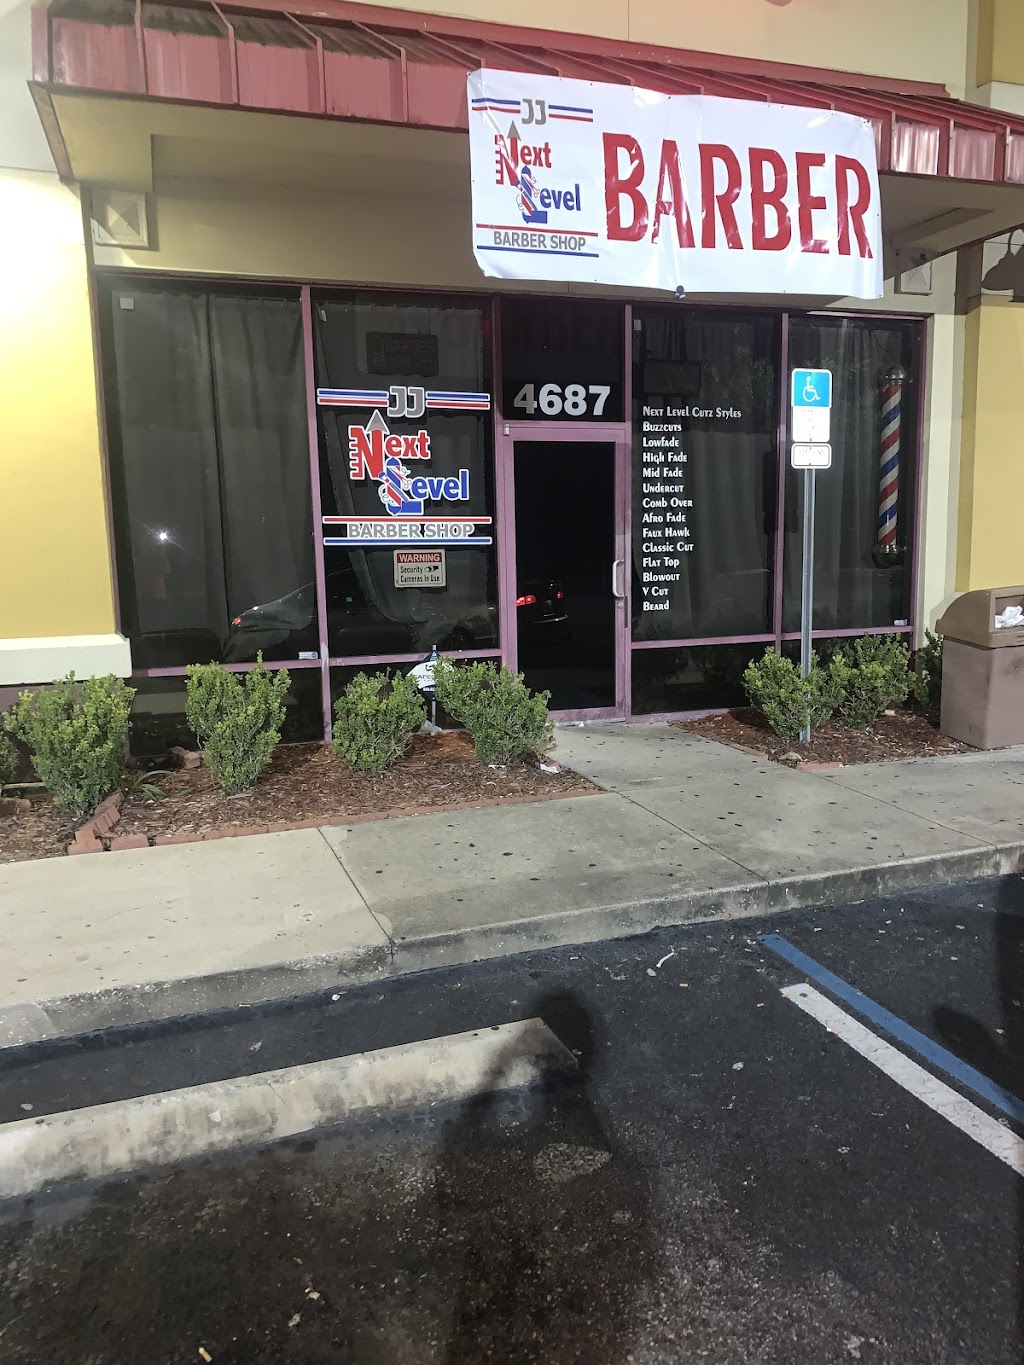 JJ Next Level Barbershop | 4687 Old Pleasant Hill Rd, Poinciana, FL 34759 | Phone: (407) 350-5367